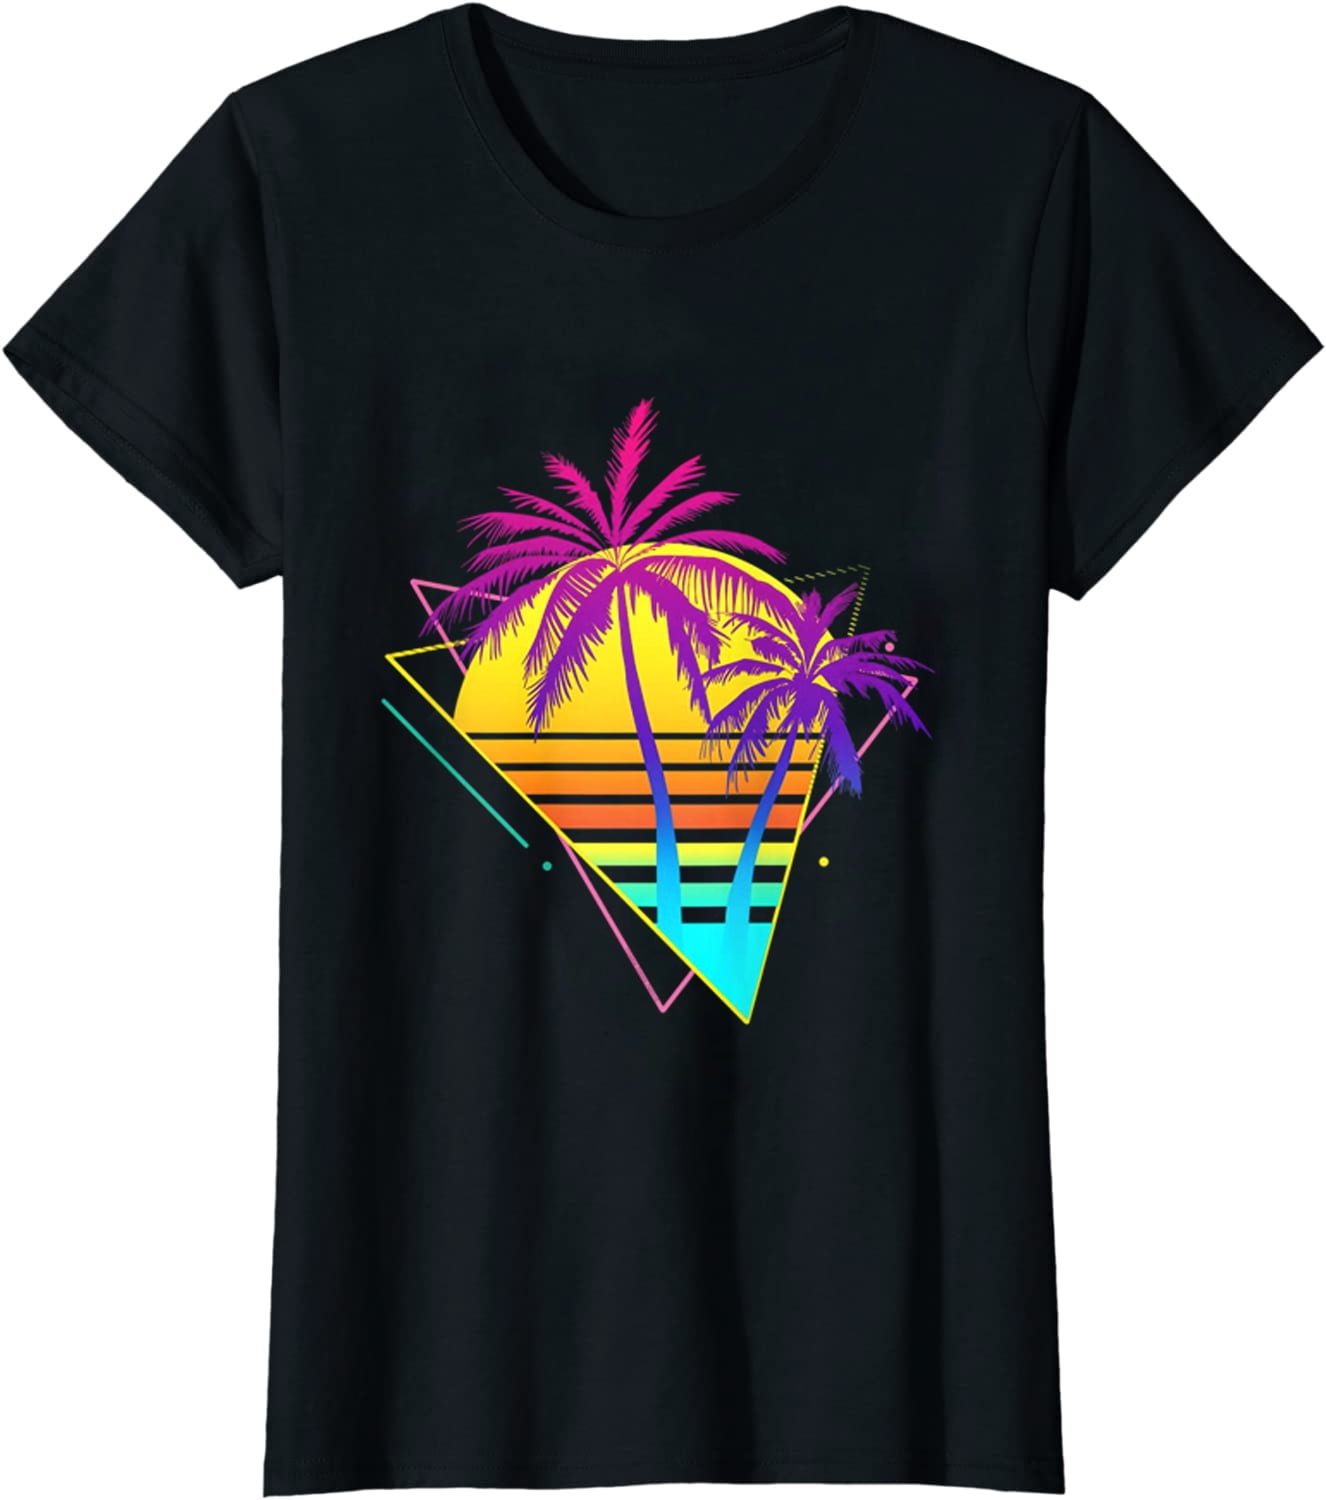 Retro 80s 90s Vaporwave Tropical Sunset Palm Trees T-Shirt - Walmart.com